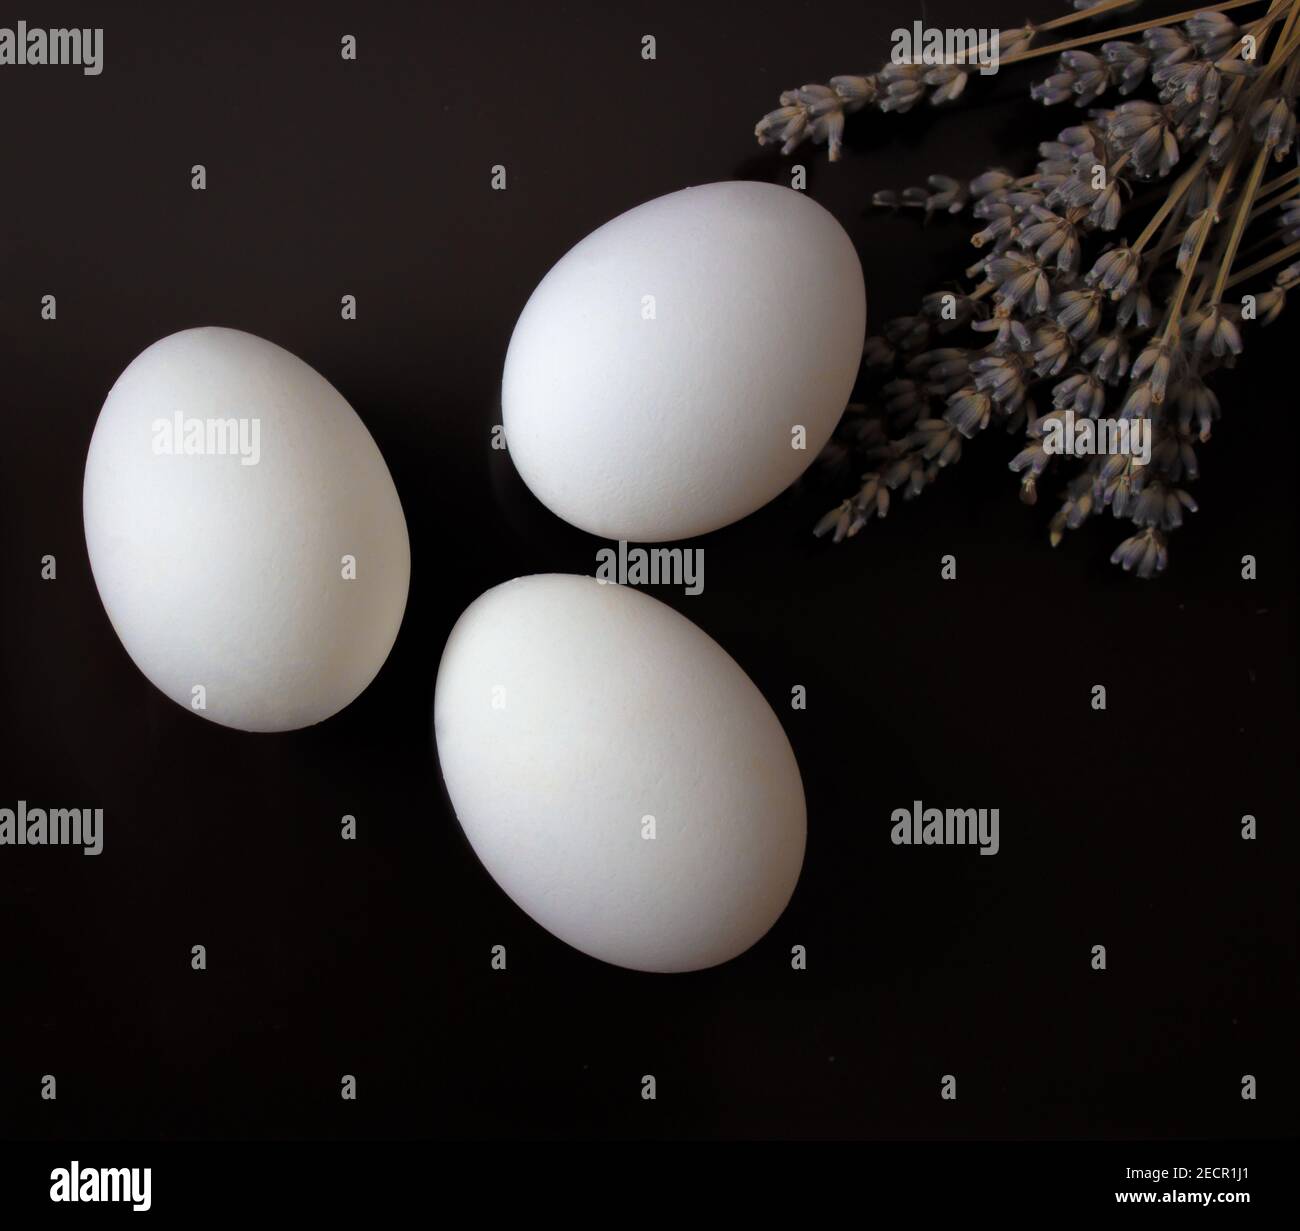 Tres huevos blancos sobre fondo oscuro con lavanda. Vista desde arriba. Huevos de Pascua. Foto de stock